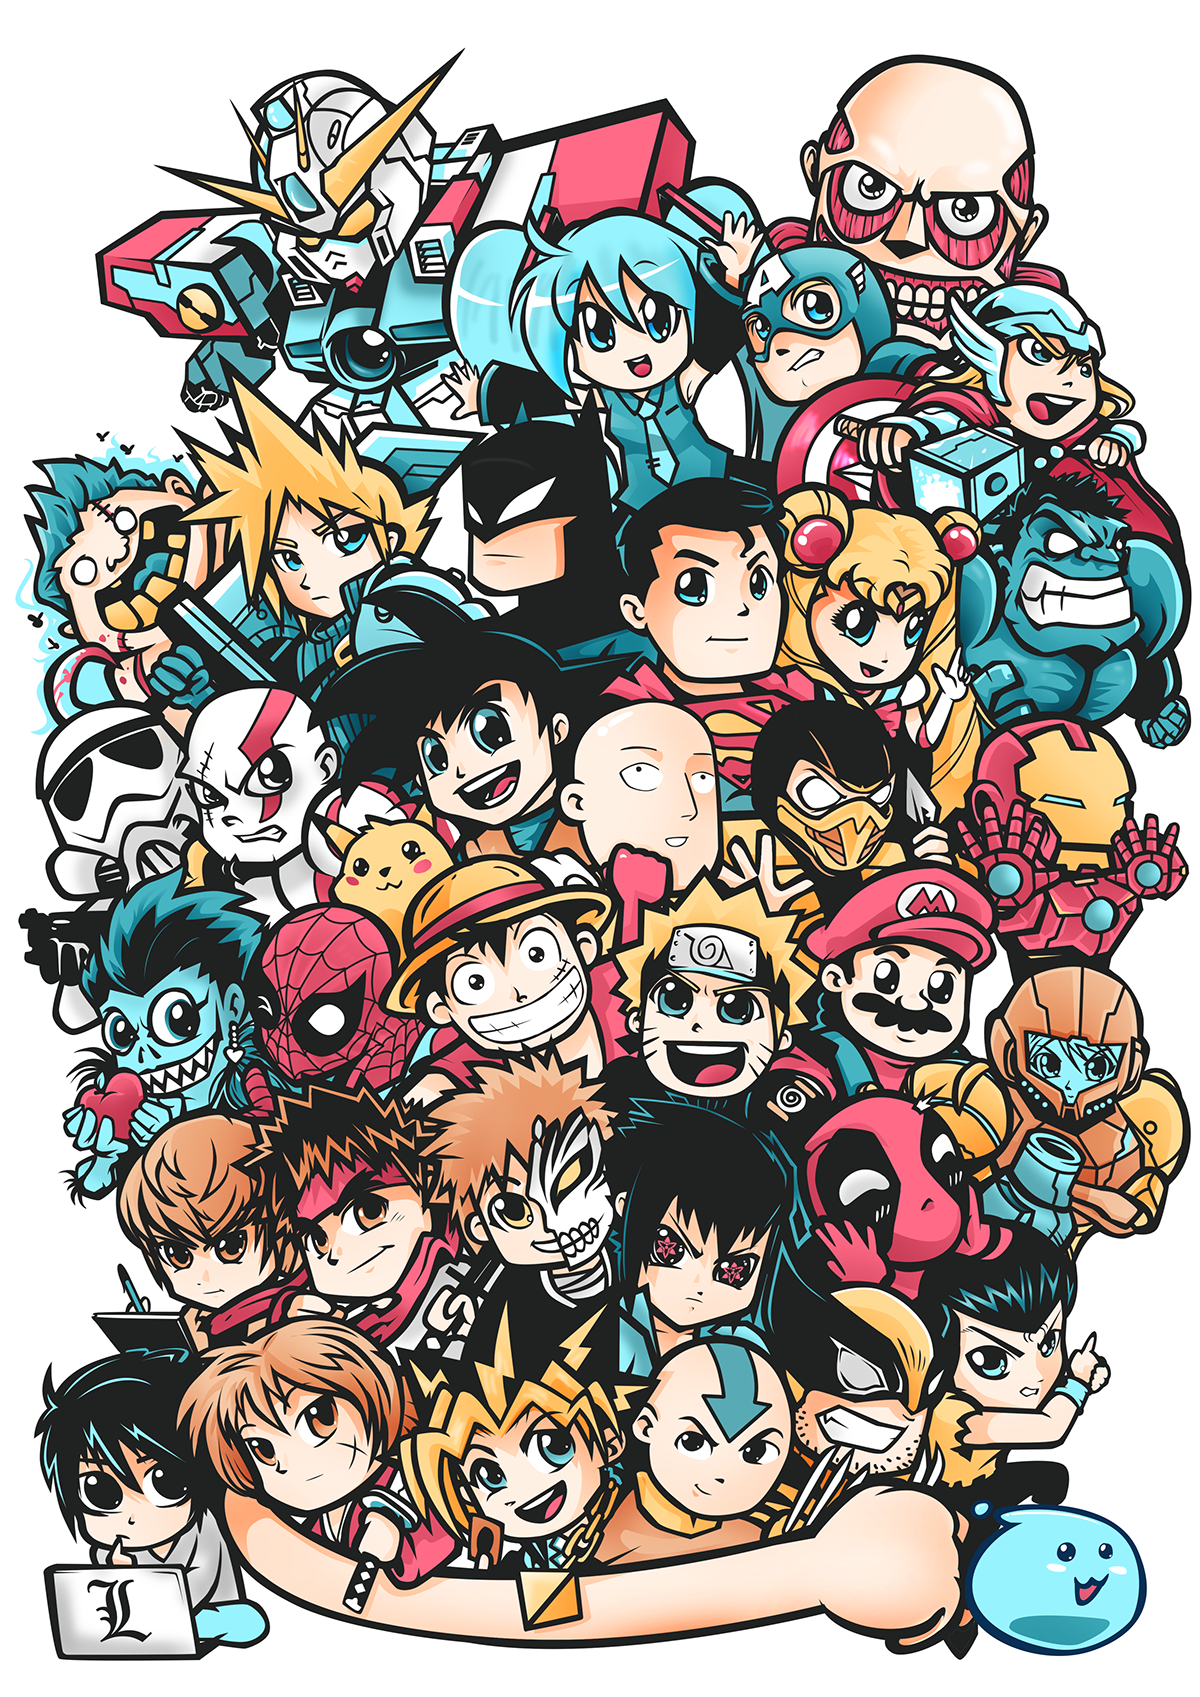 DOODLE BURST mixed anime and doodles by KoroNeko on DeviantArt